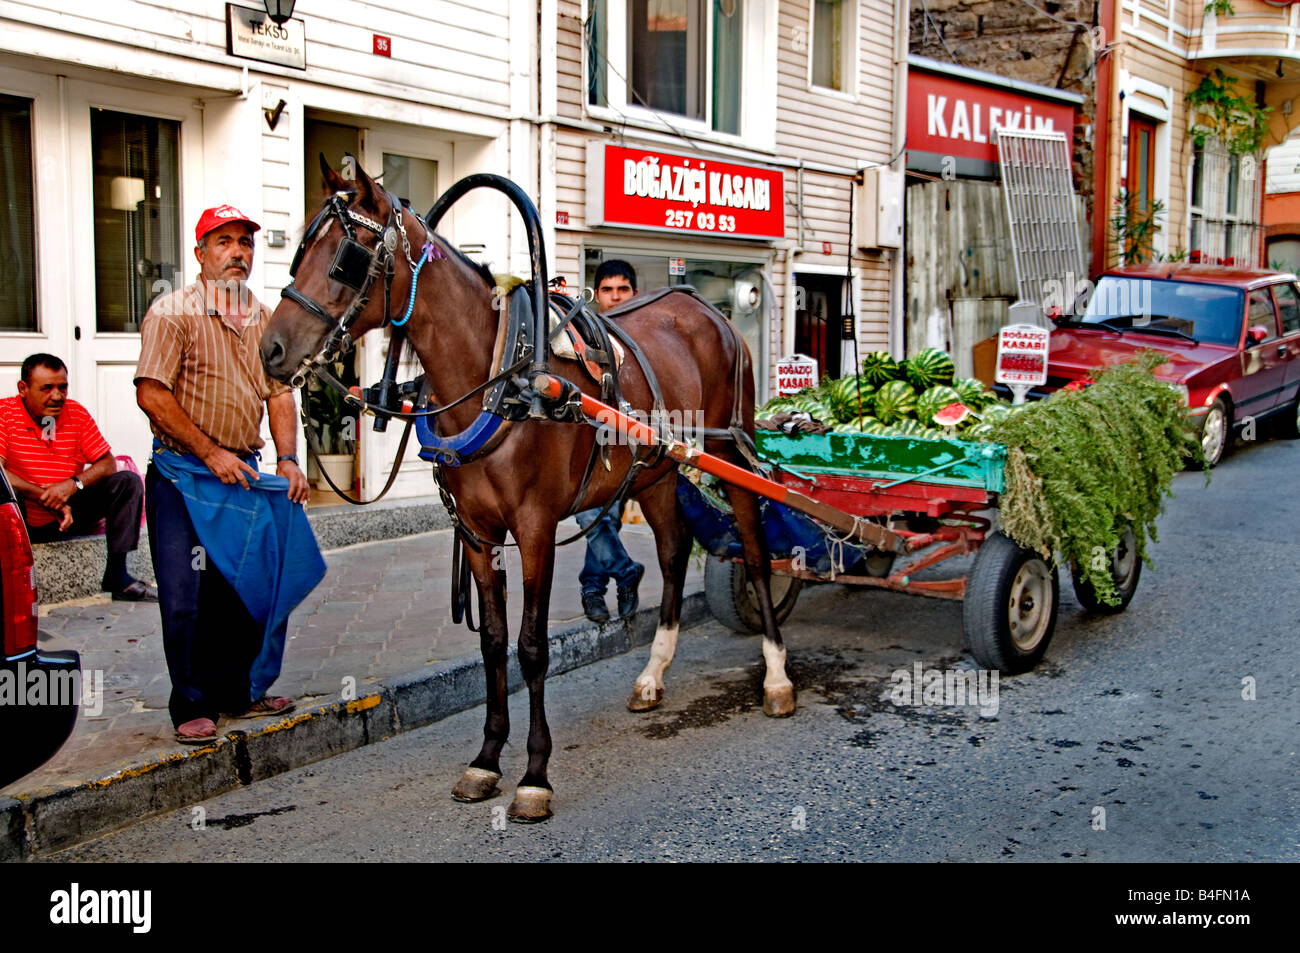 Bebek Istanbul Man Horse Cart Greengrocer Stock Photo